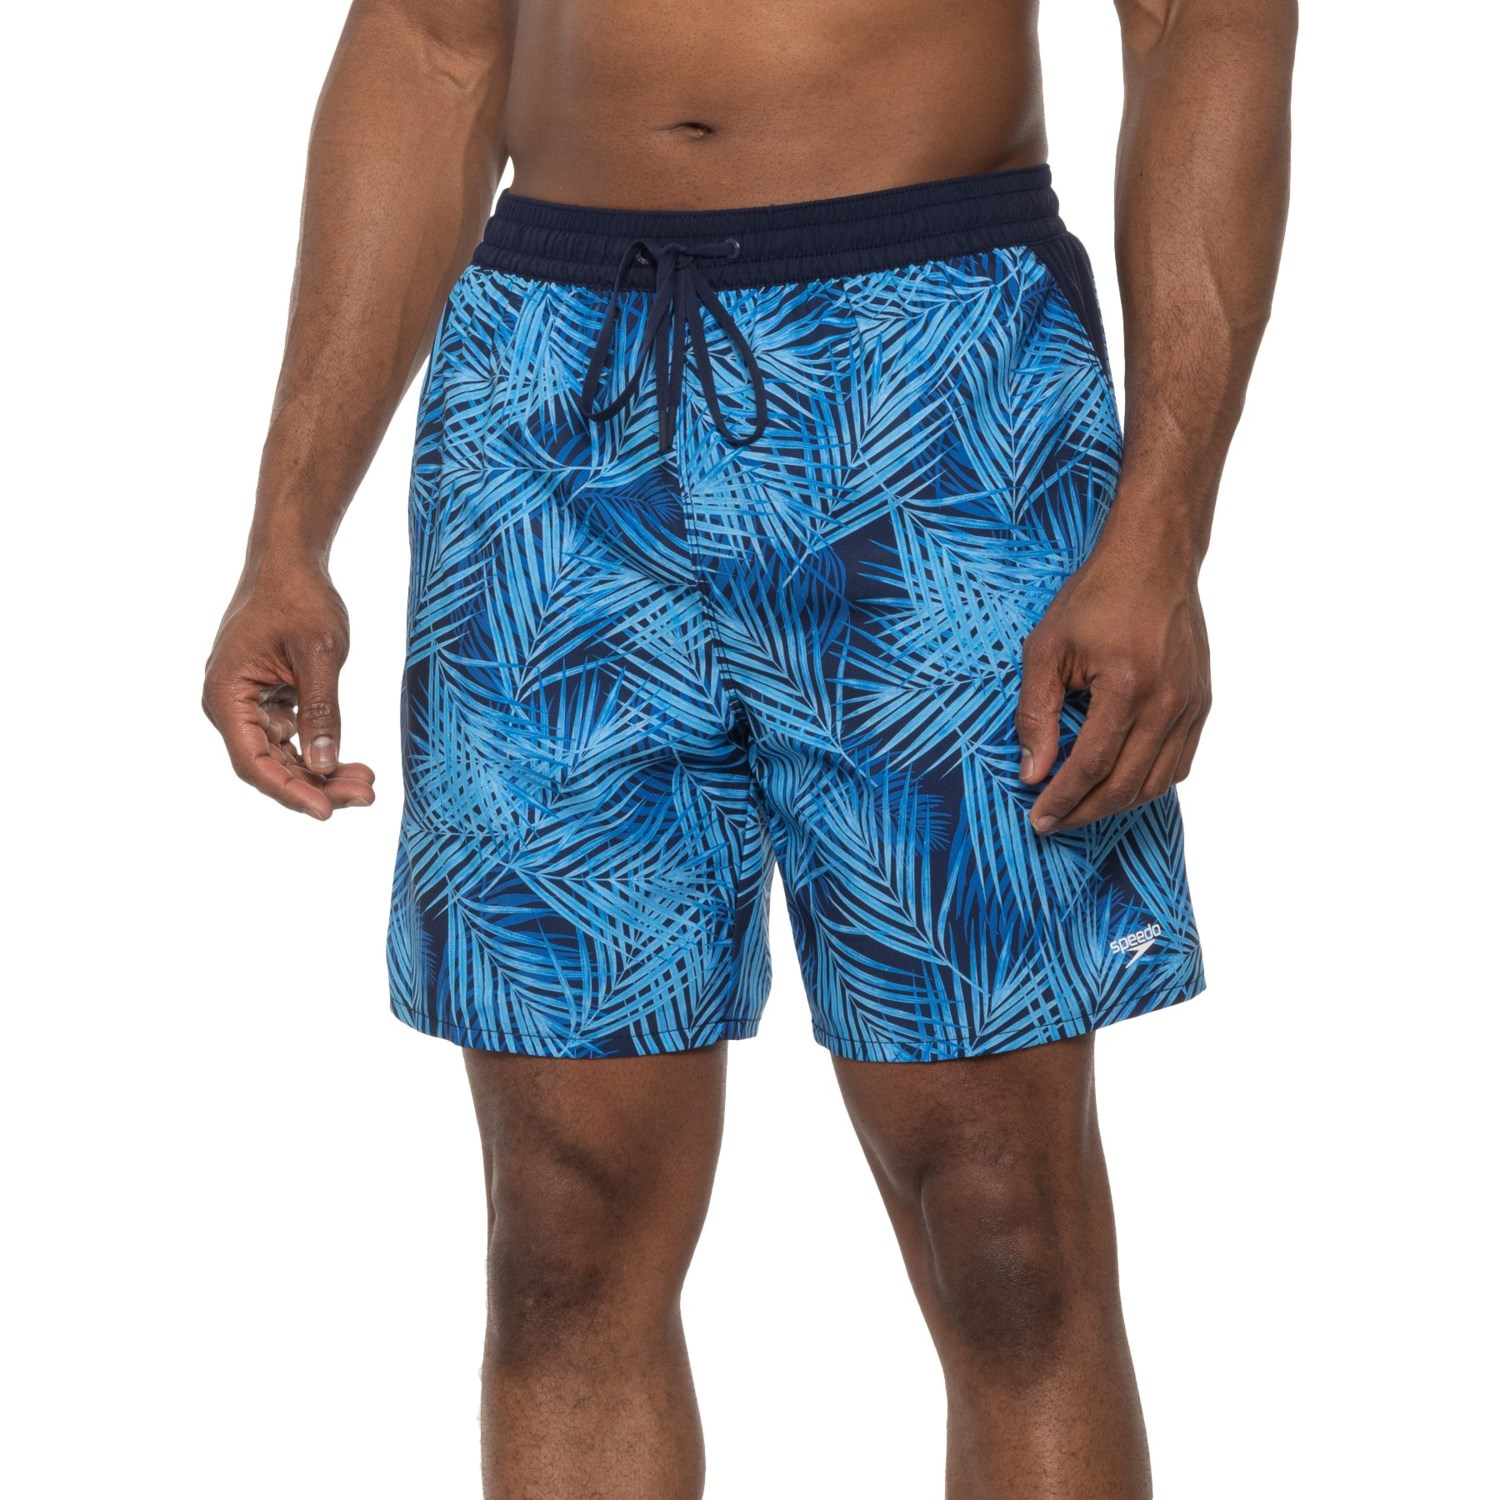 Speedo Seaside Volley Swim Trunks (For Men) - Save 51%